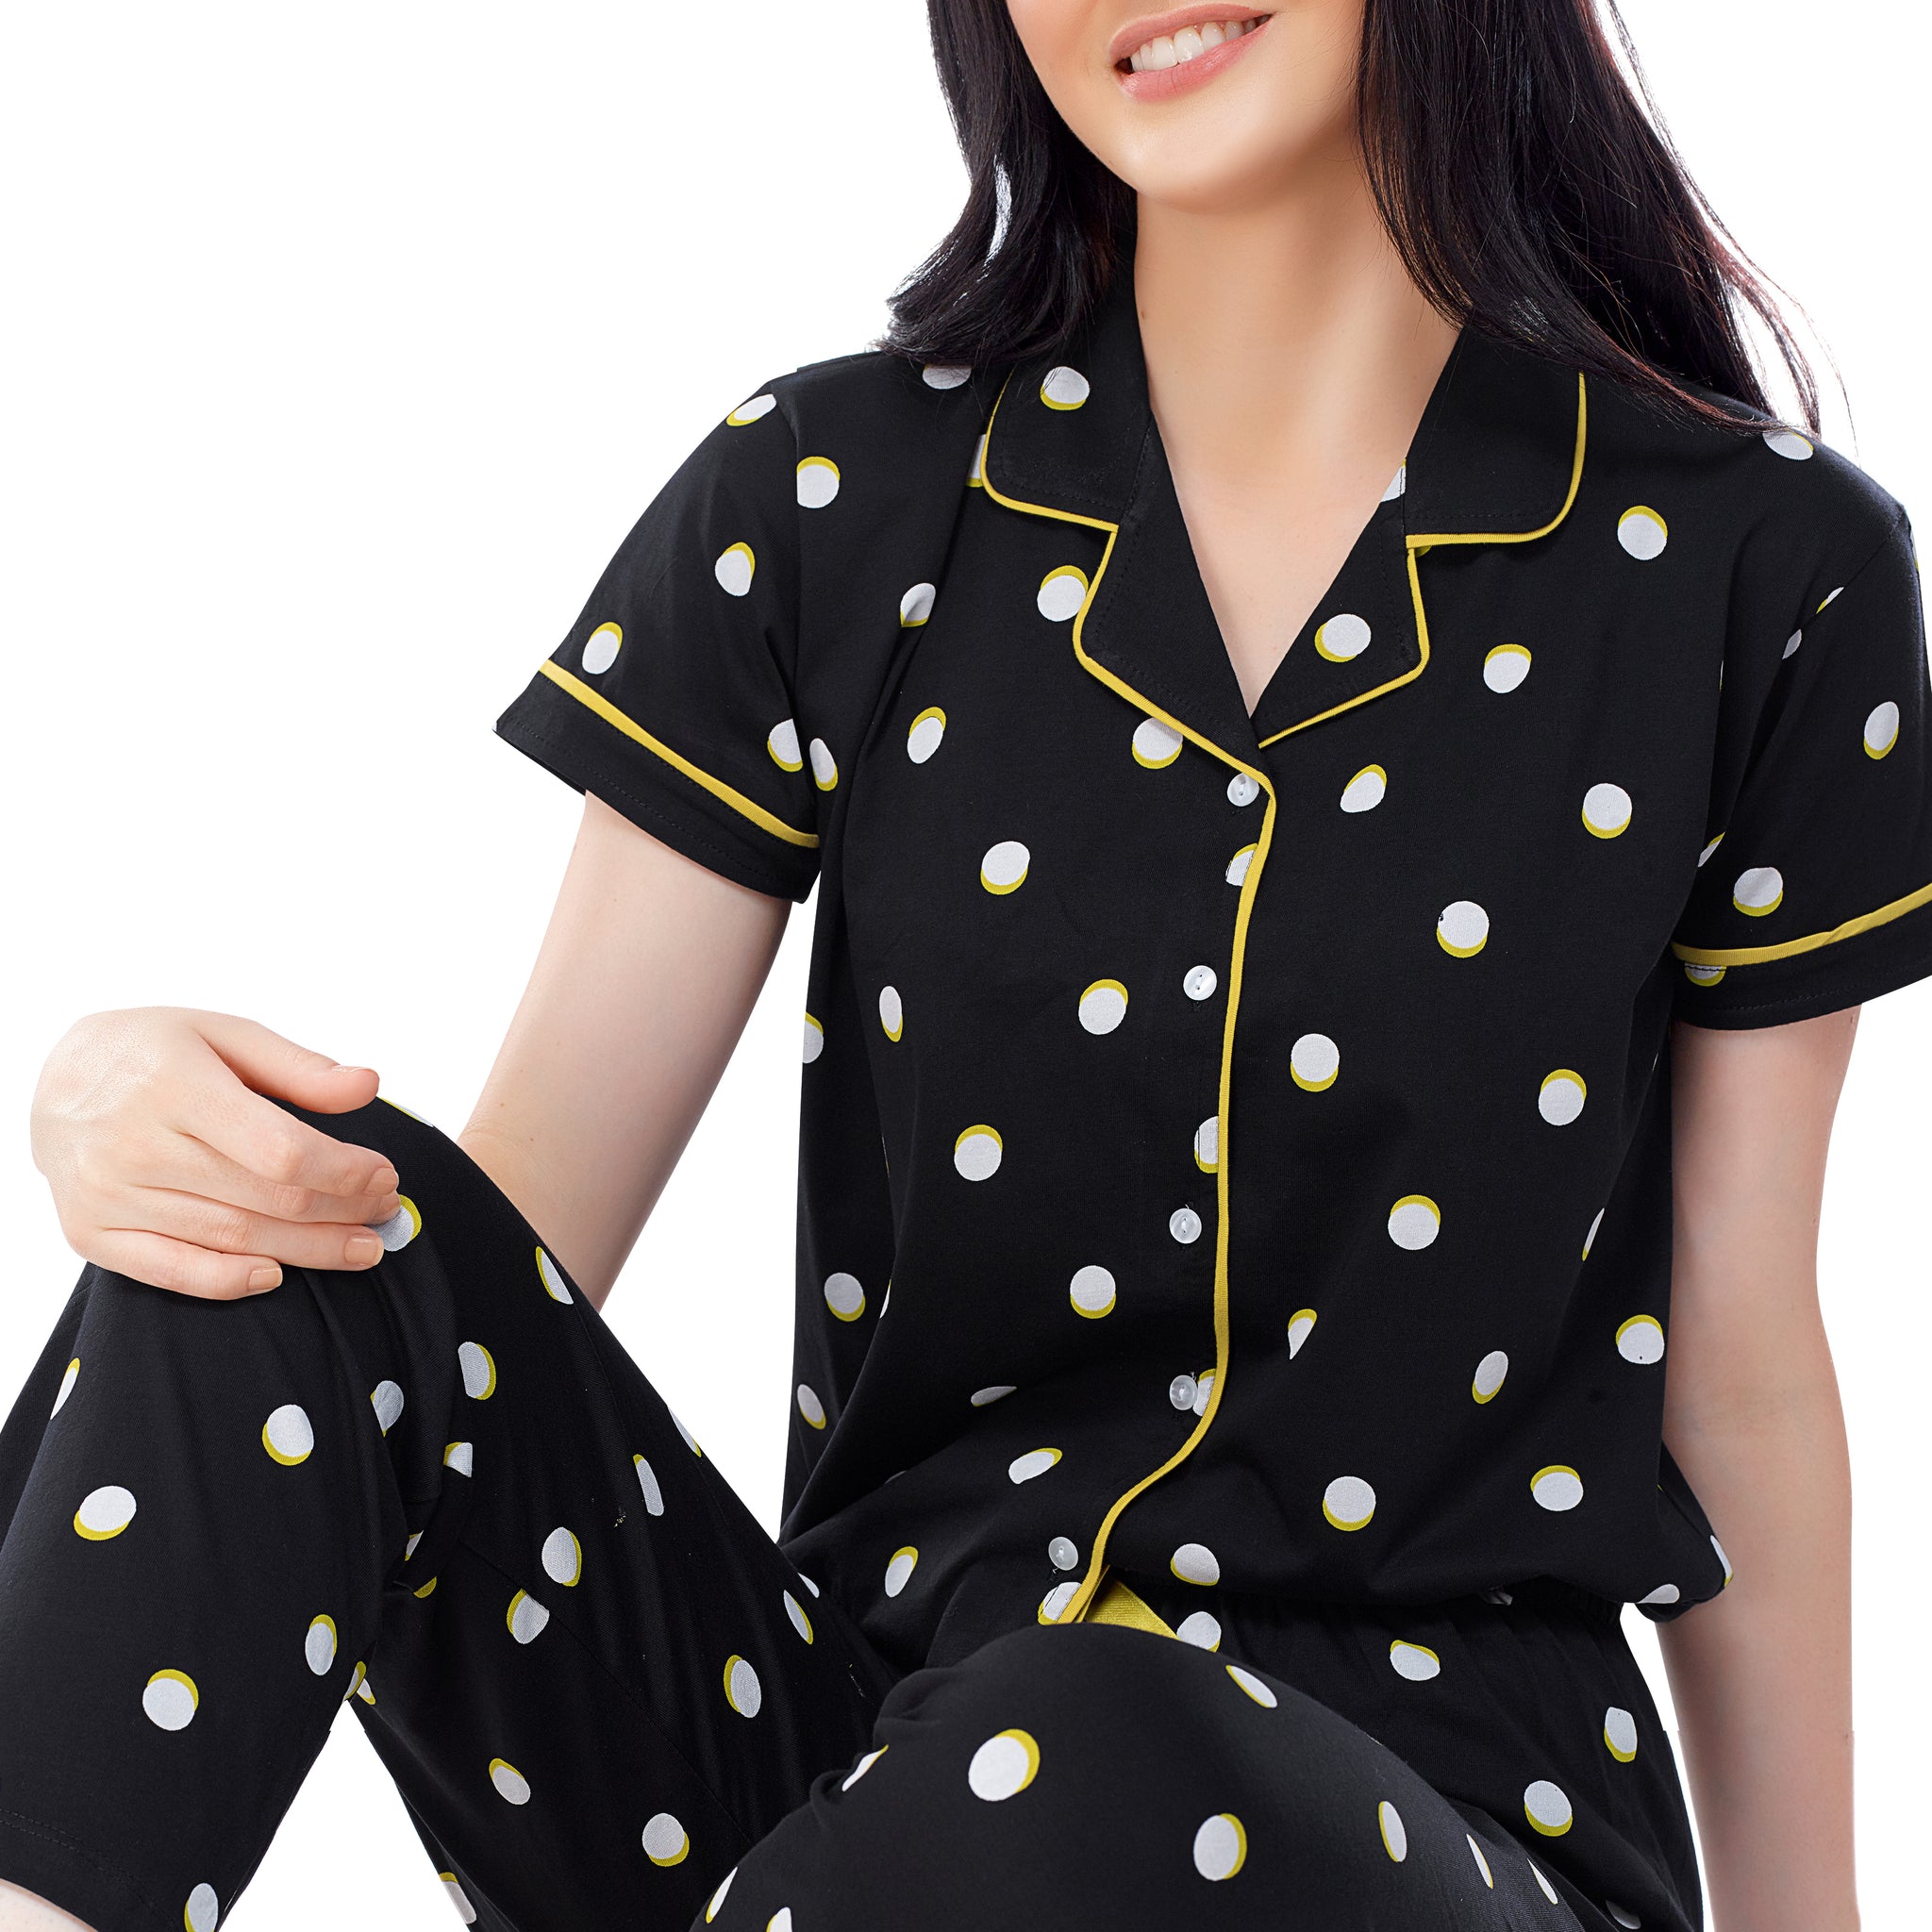 ZEYO Women's Cotton Black Polka Dots Printed Stylish Night suit set